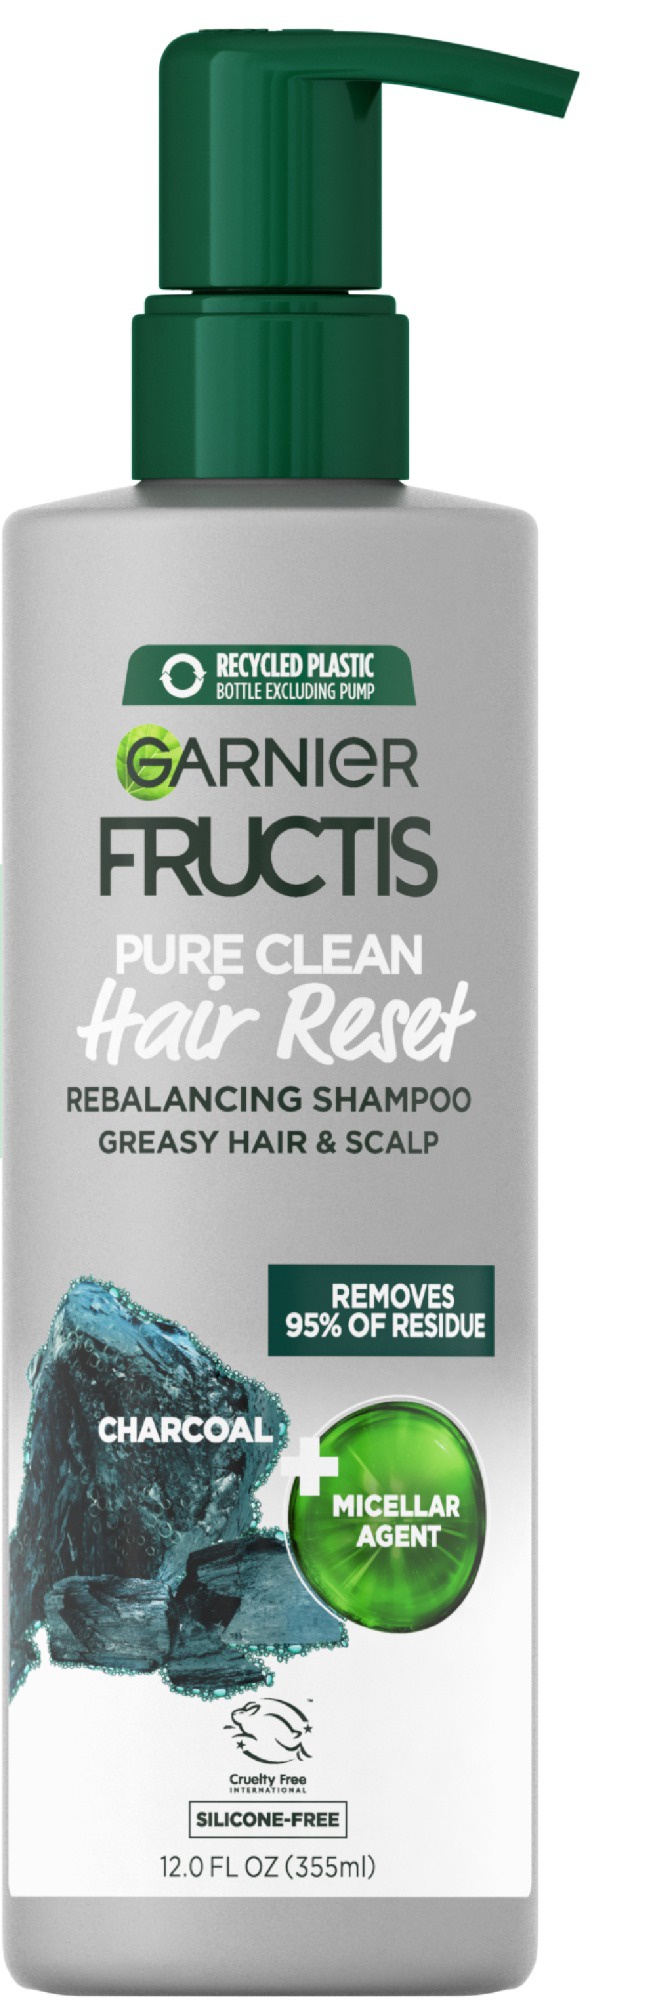 Garnier Fructis Pure Clean Hair Reset Rebalancing Charcoal Shampoo